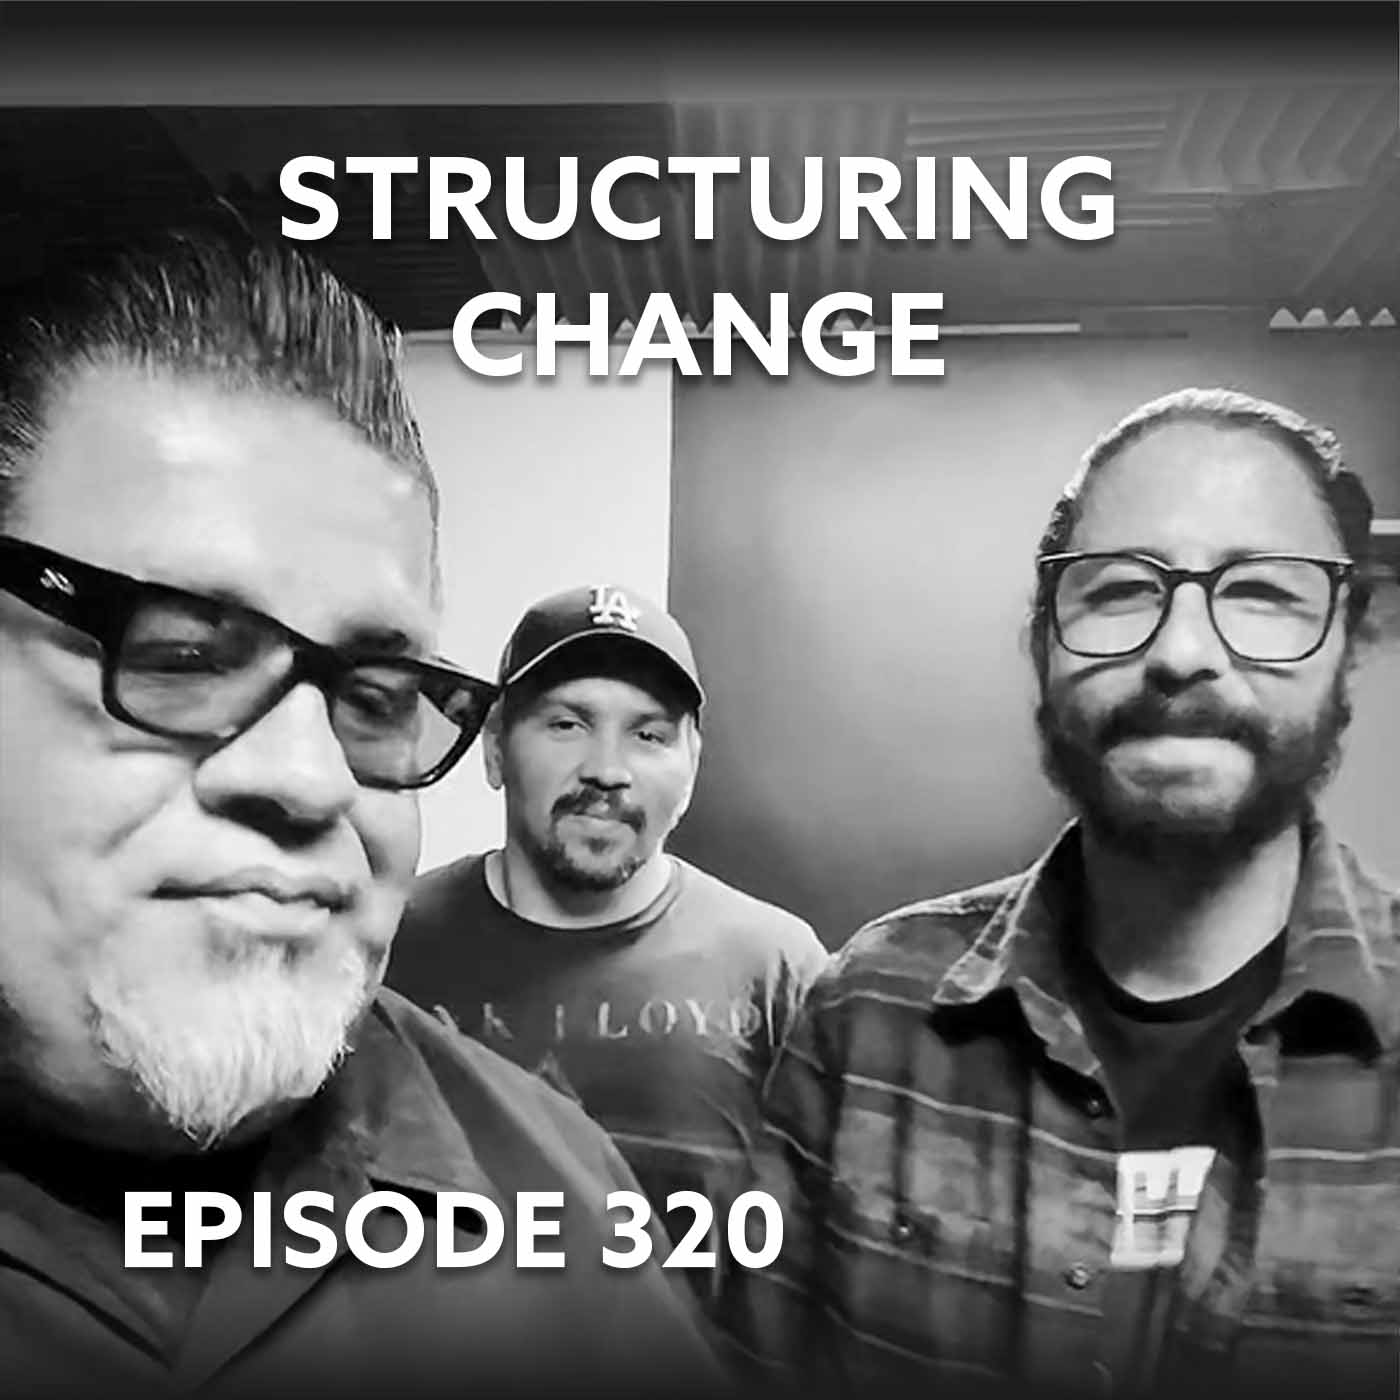 Episode 320 – Structuring Change